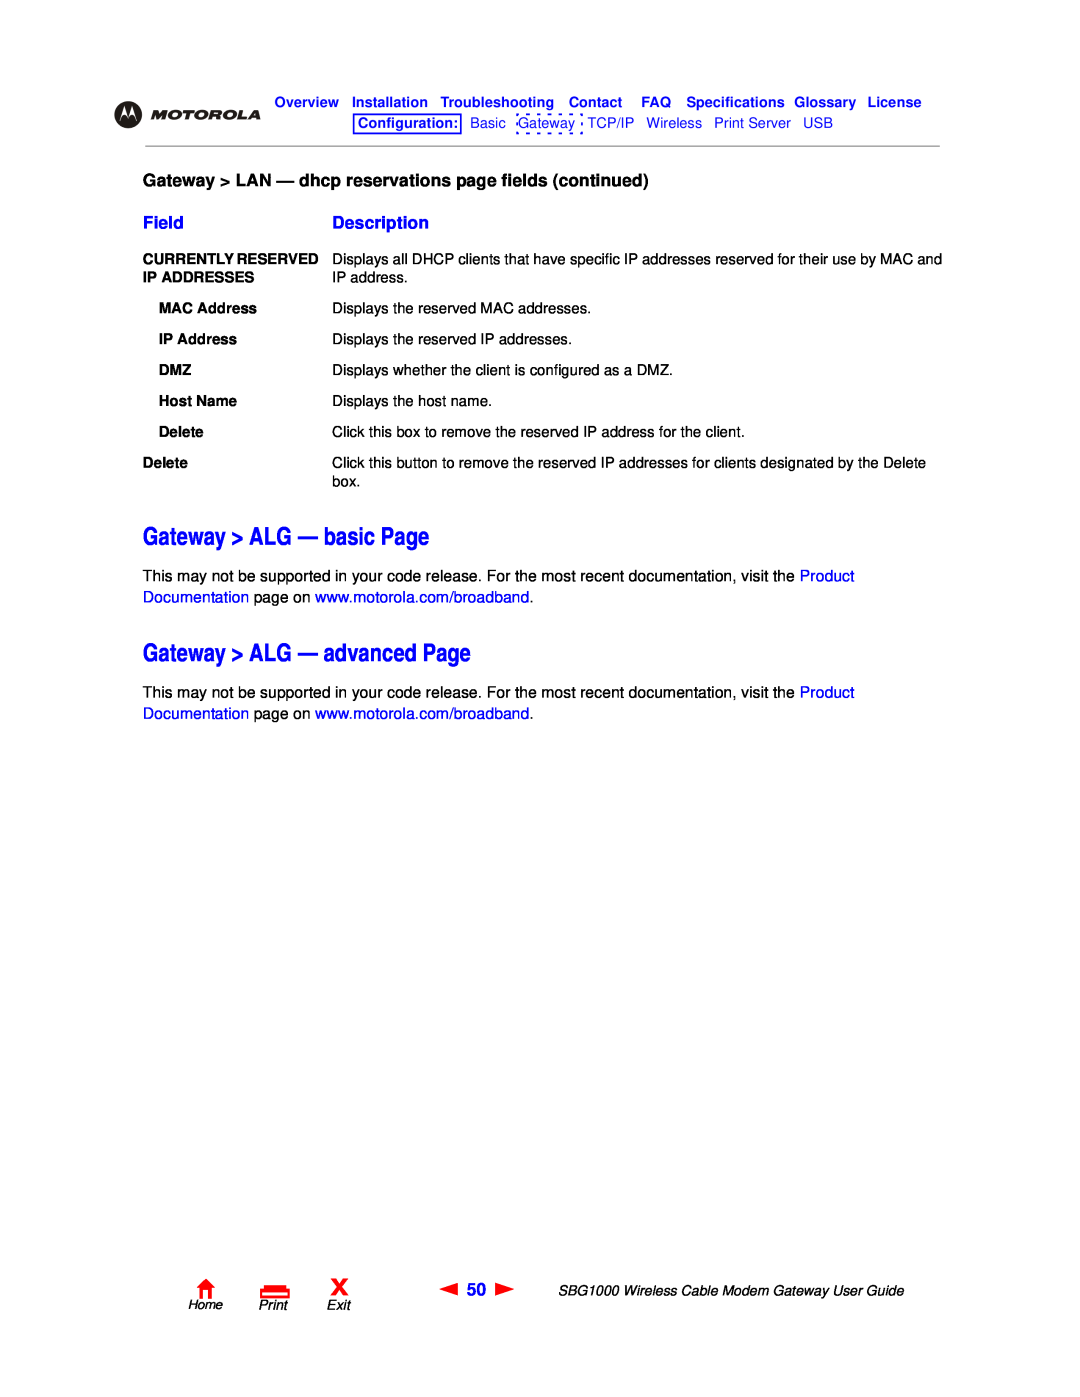 Motorola SBG1000 manual Gateway ALG - basic Page, Gateway ALG - advanced Page, Field, Description, Home Print Exit 